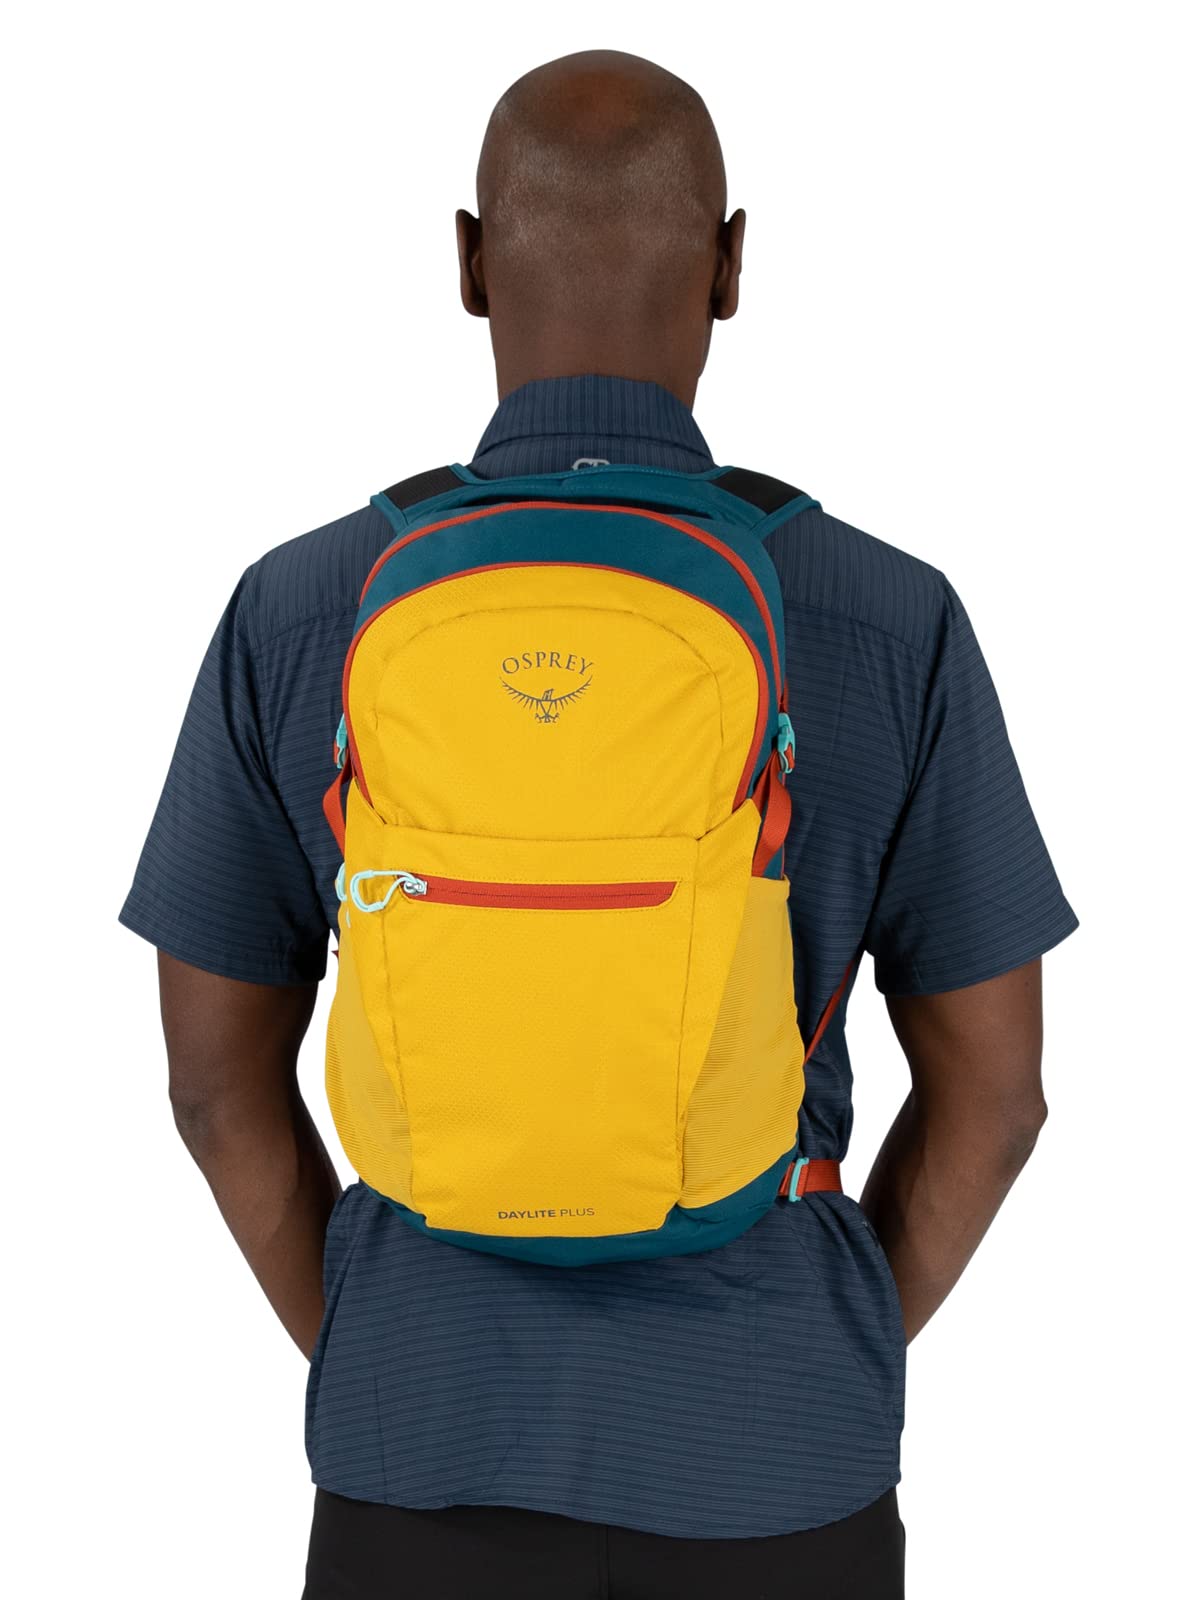 Osprey Daylite Plus Everyday Backpack, Silver Lining/Blueberry, One Size